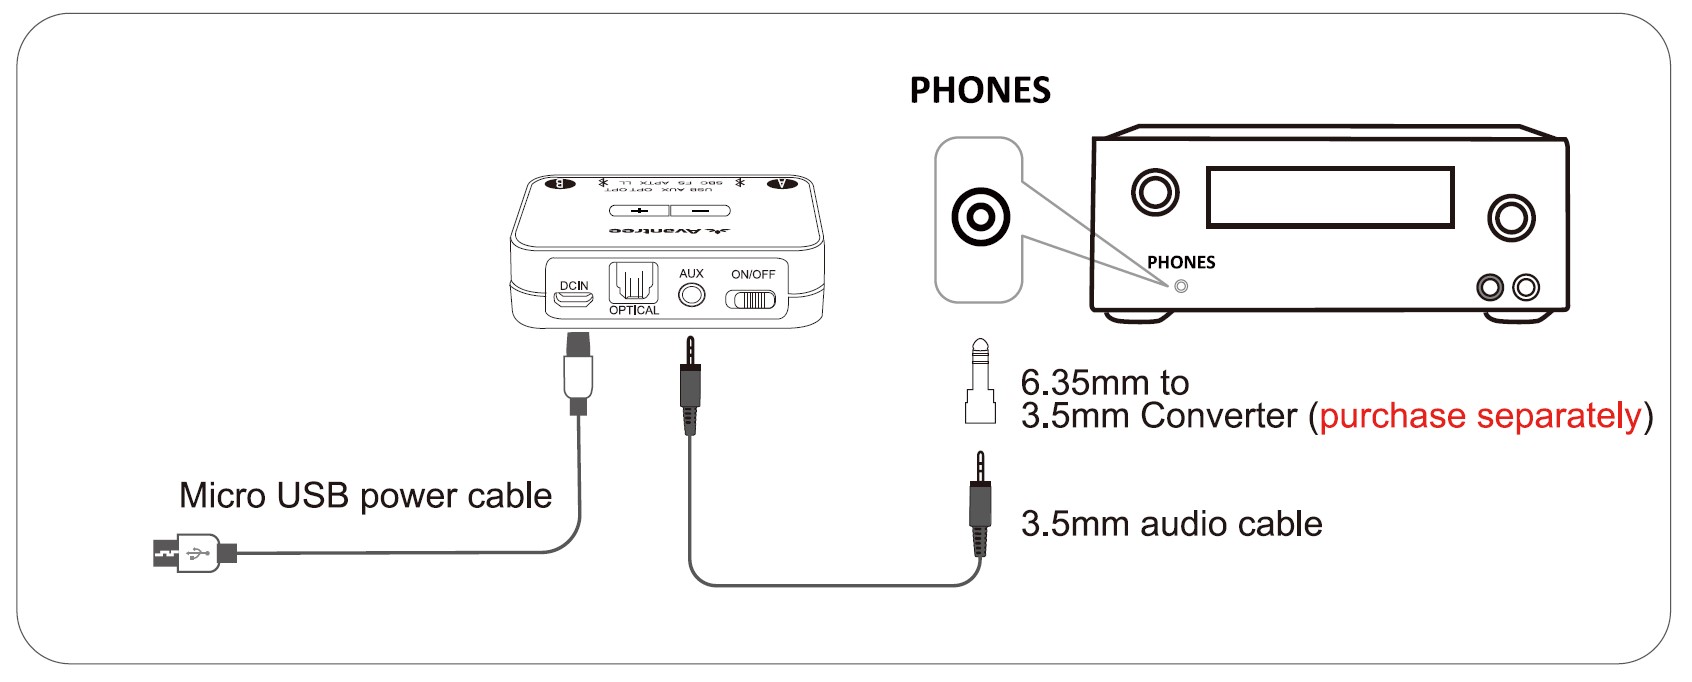 Avantree-TC-418-P-Audikast-Plus-Bluetooth-Transmitter-User-Manual-12